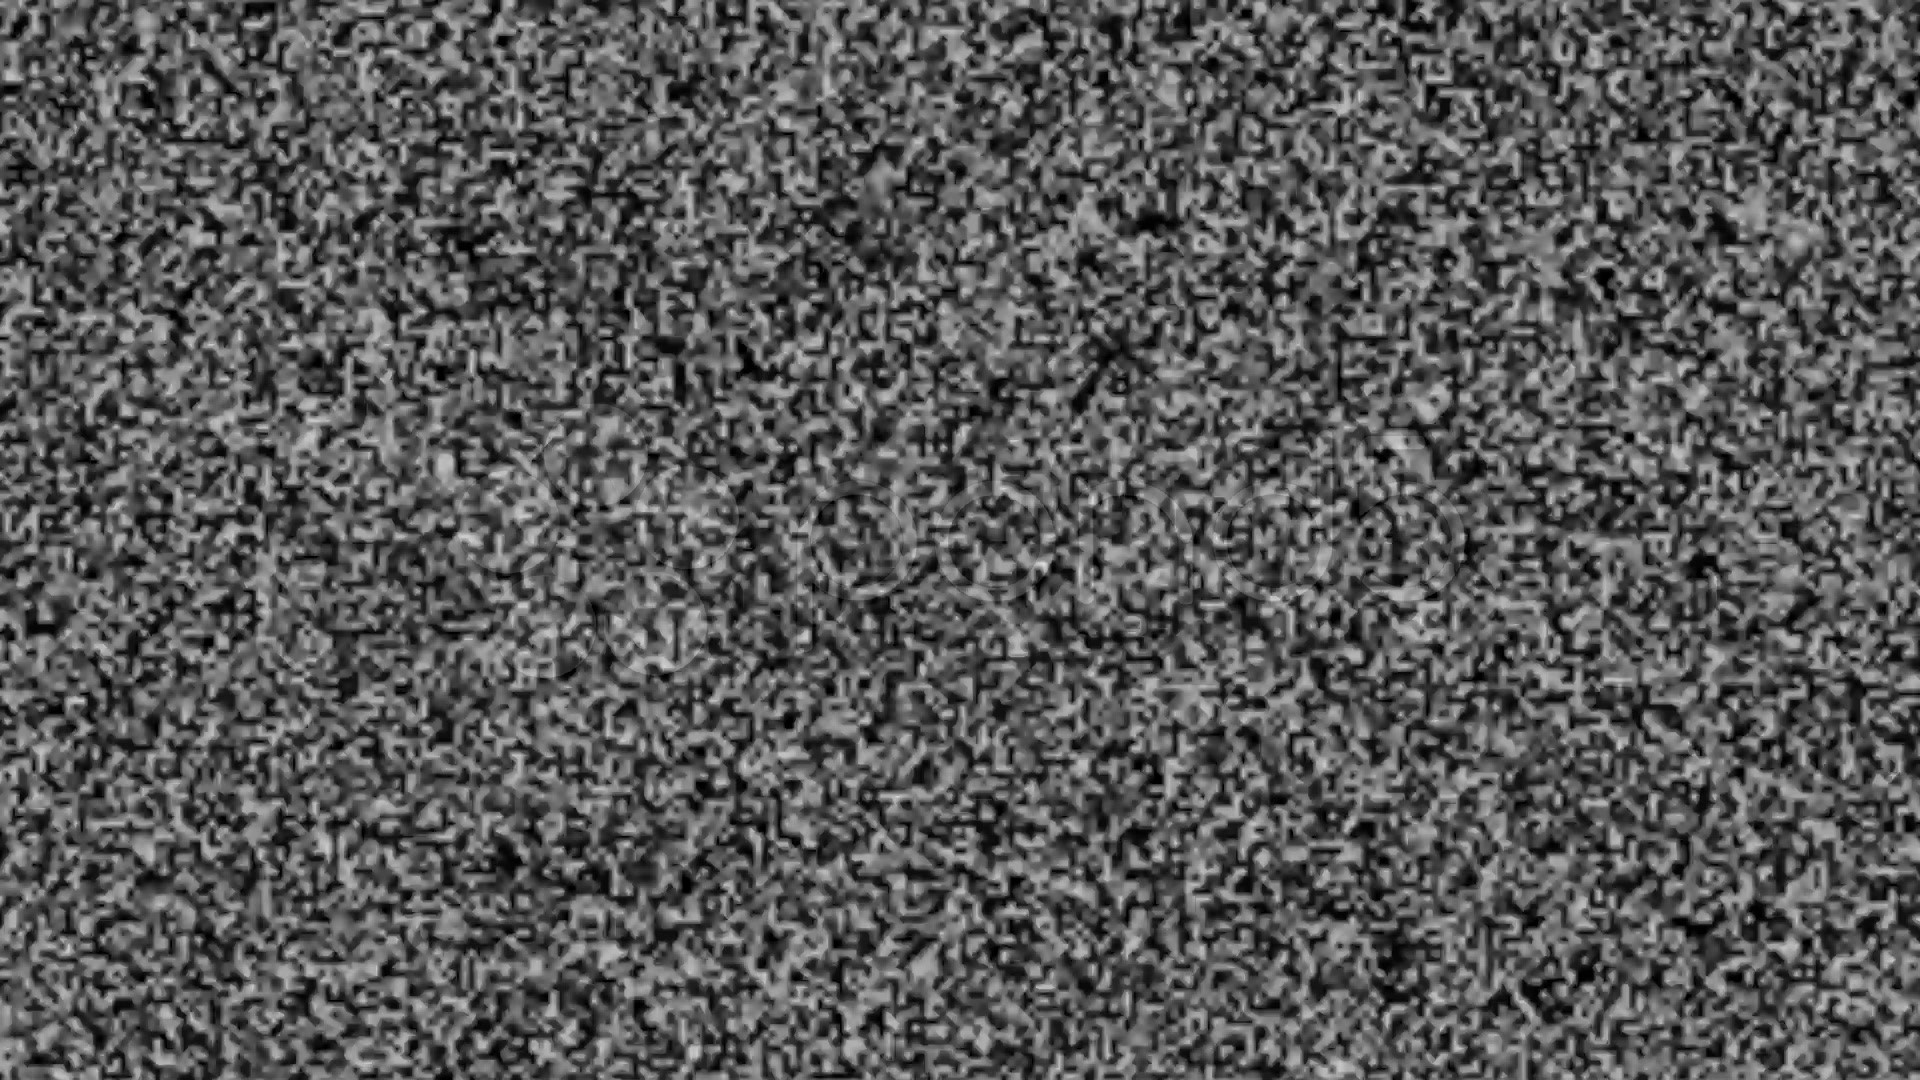 1920x1080 Tv Static Wallpaper Tv static